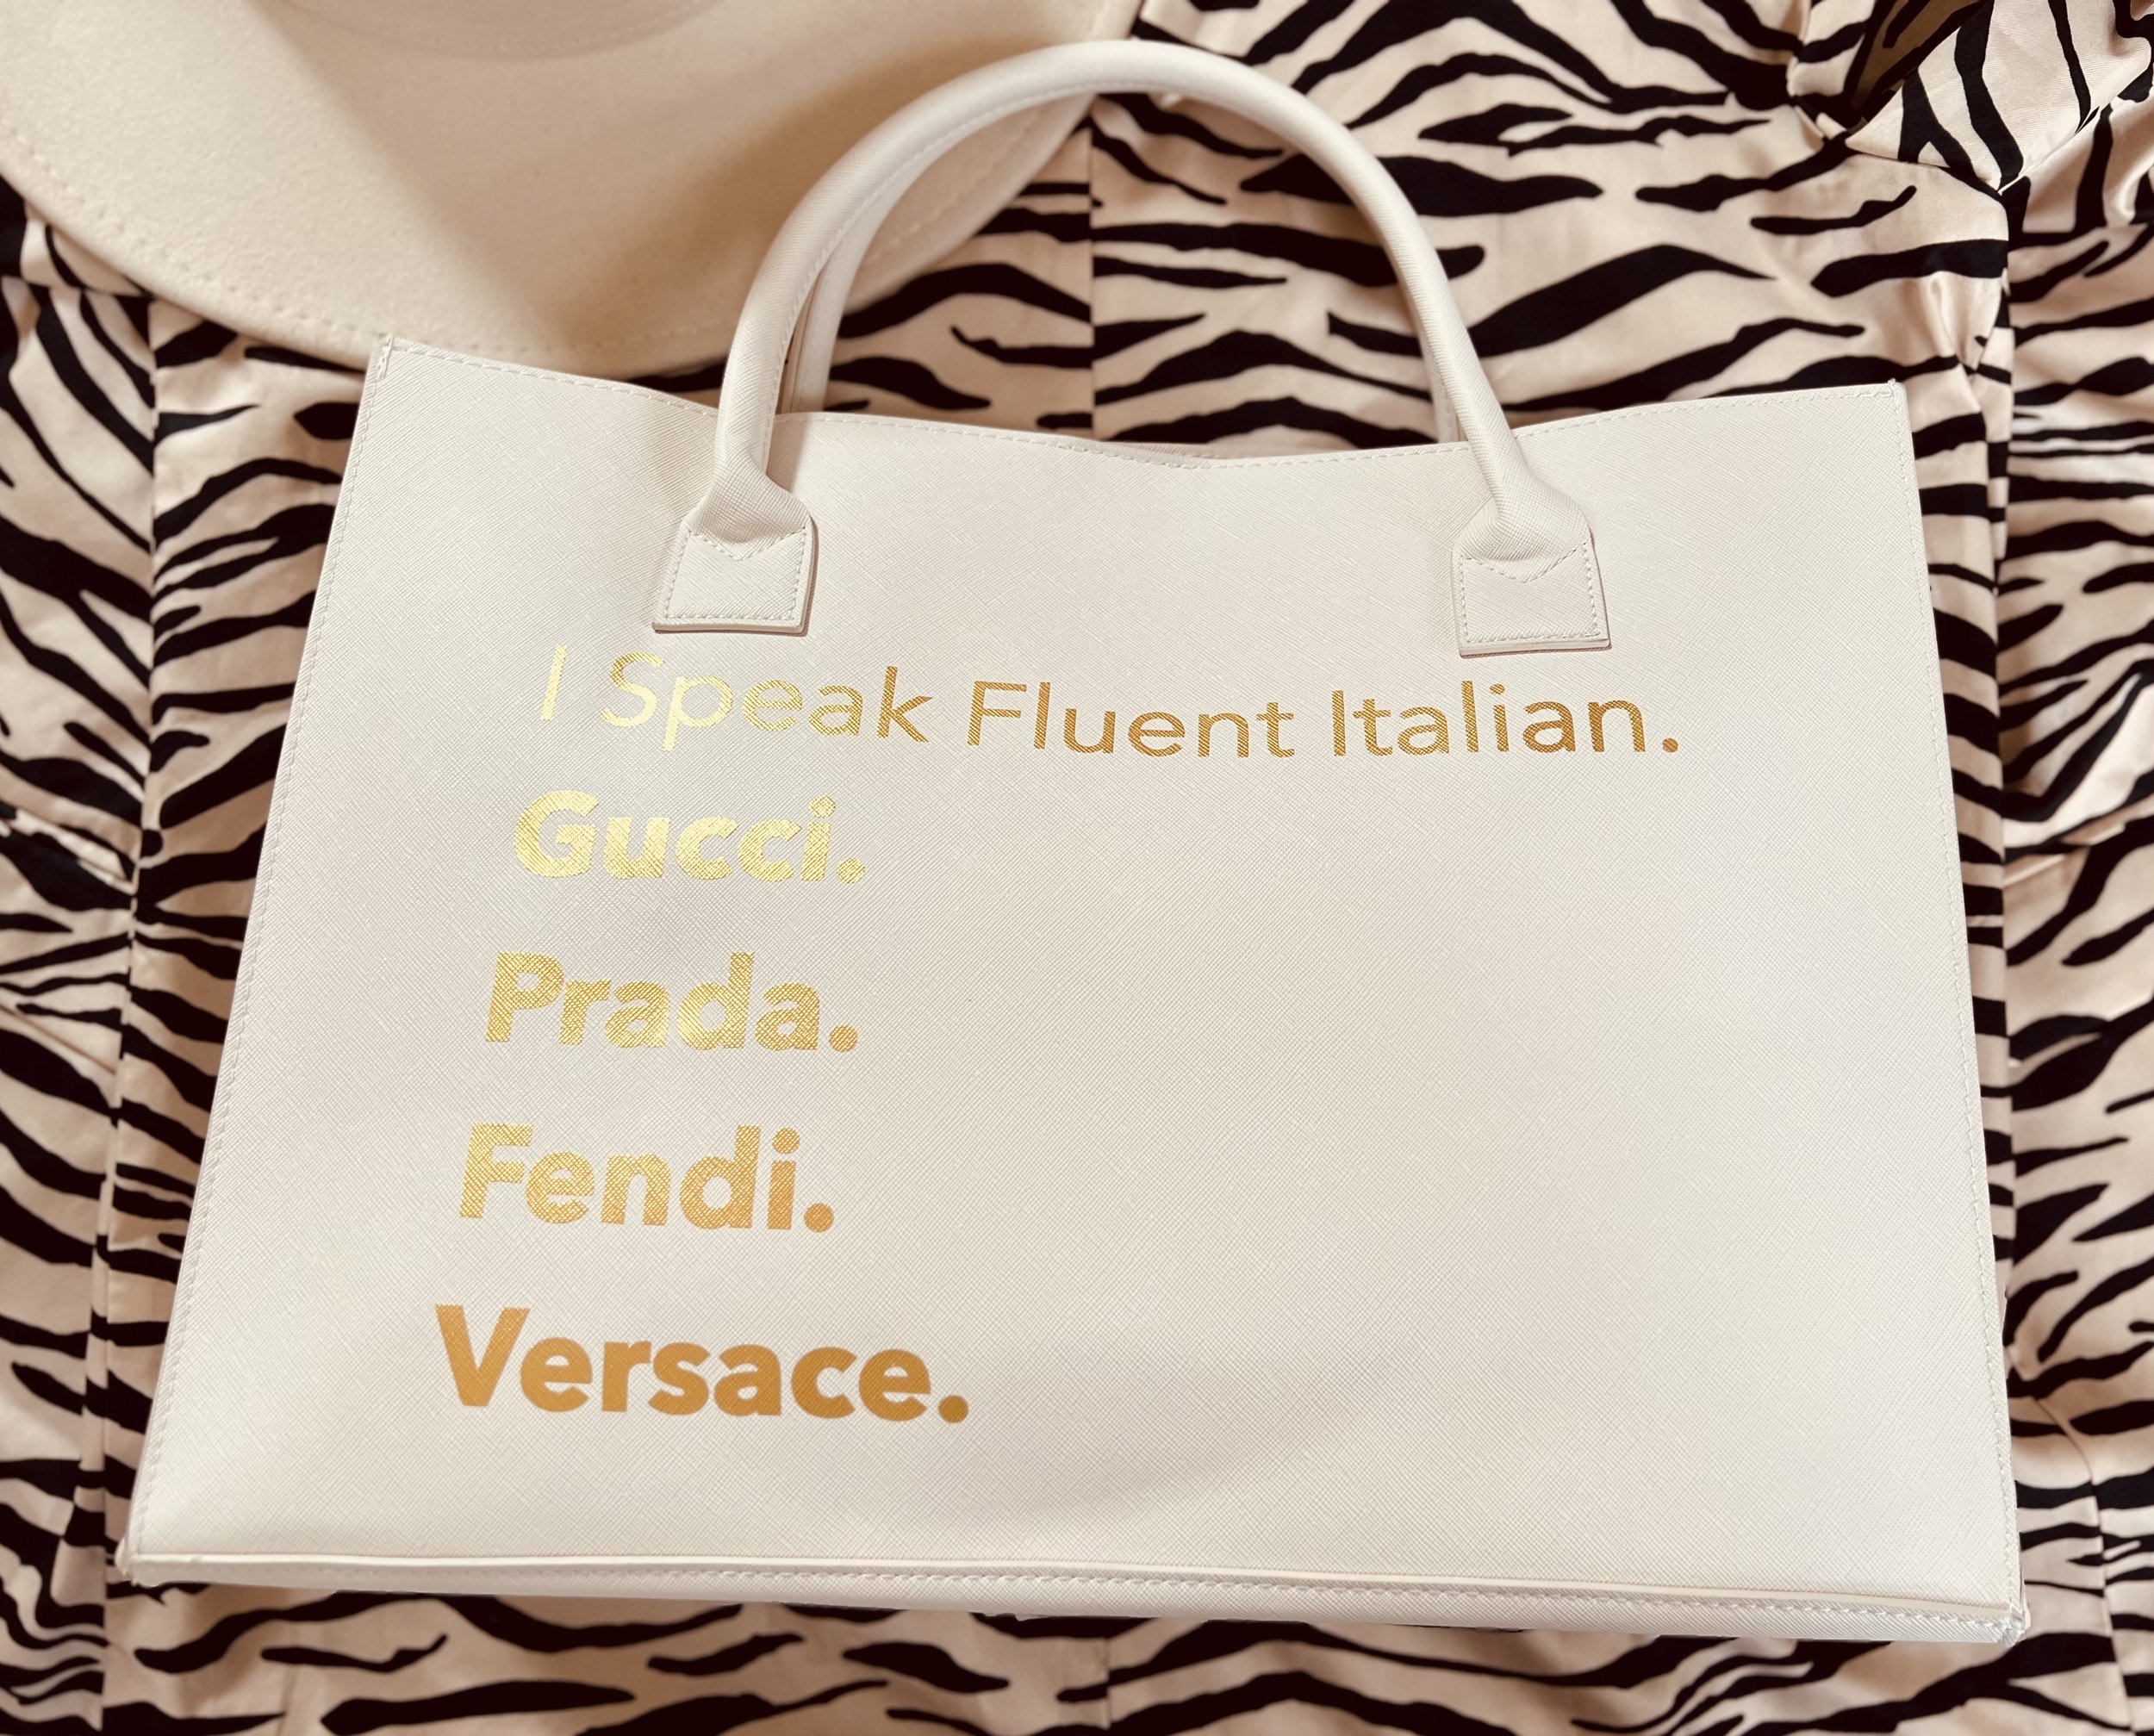 I SPEAK Gucci Prada Fendi Versace Vegan Tote 